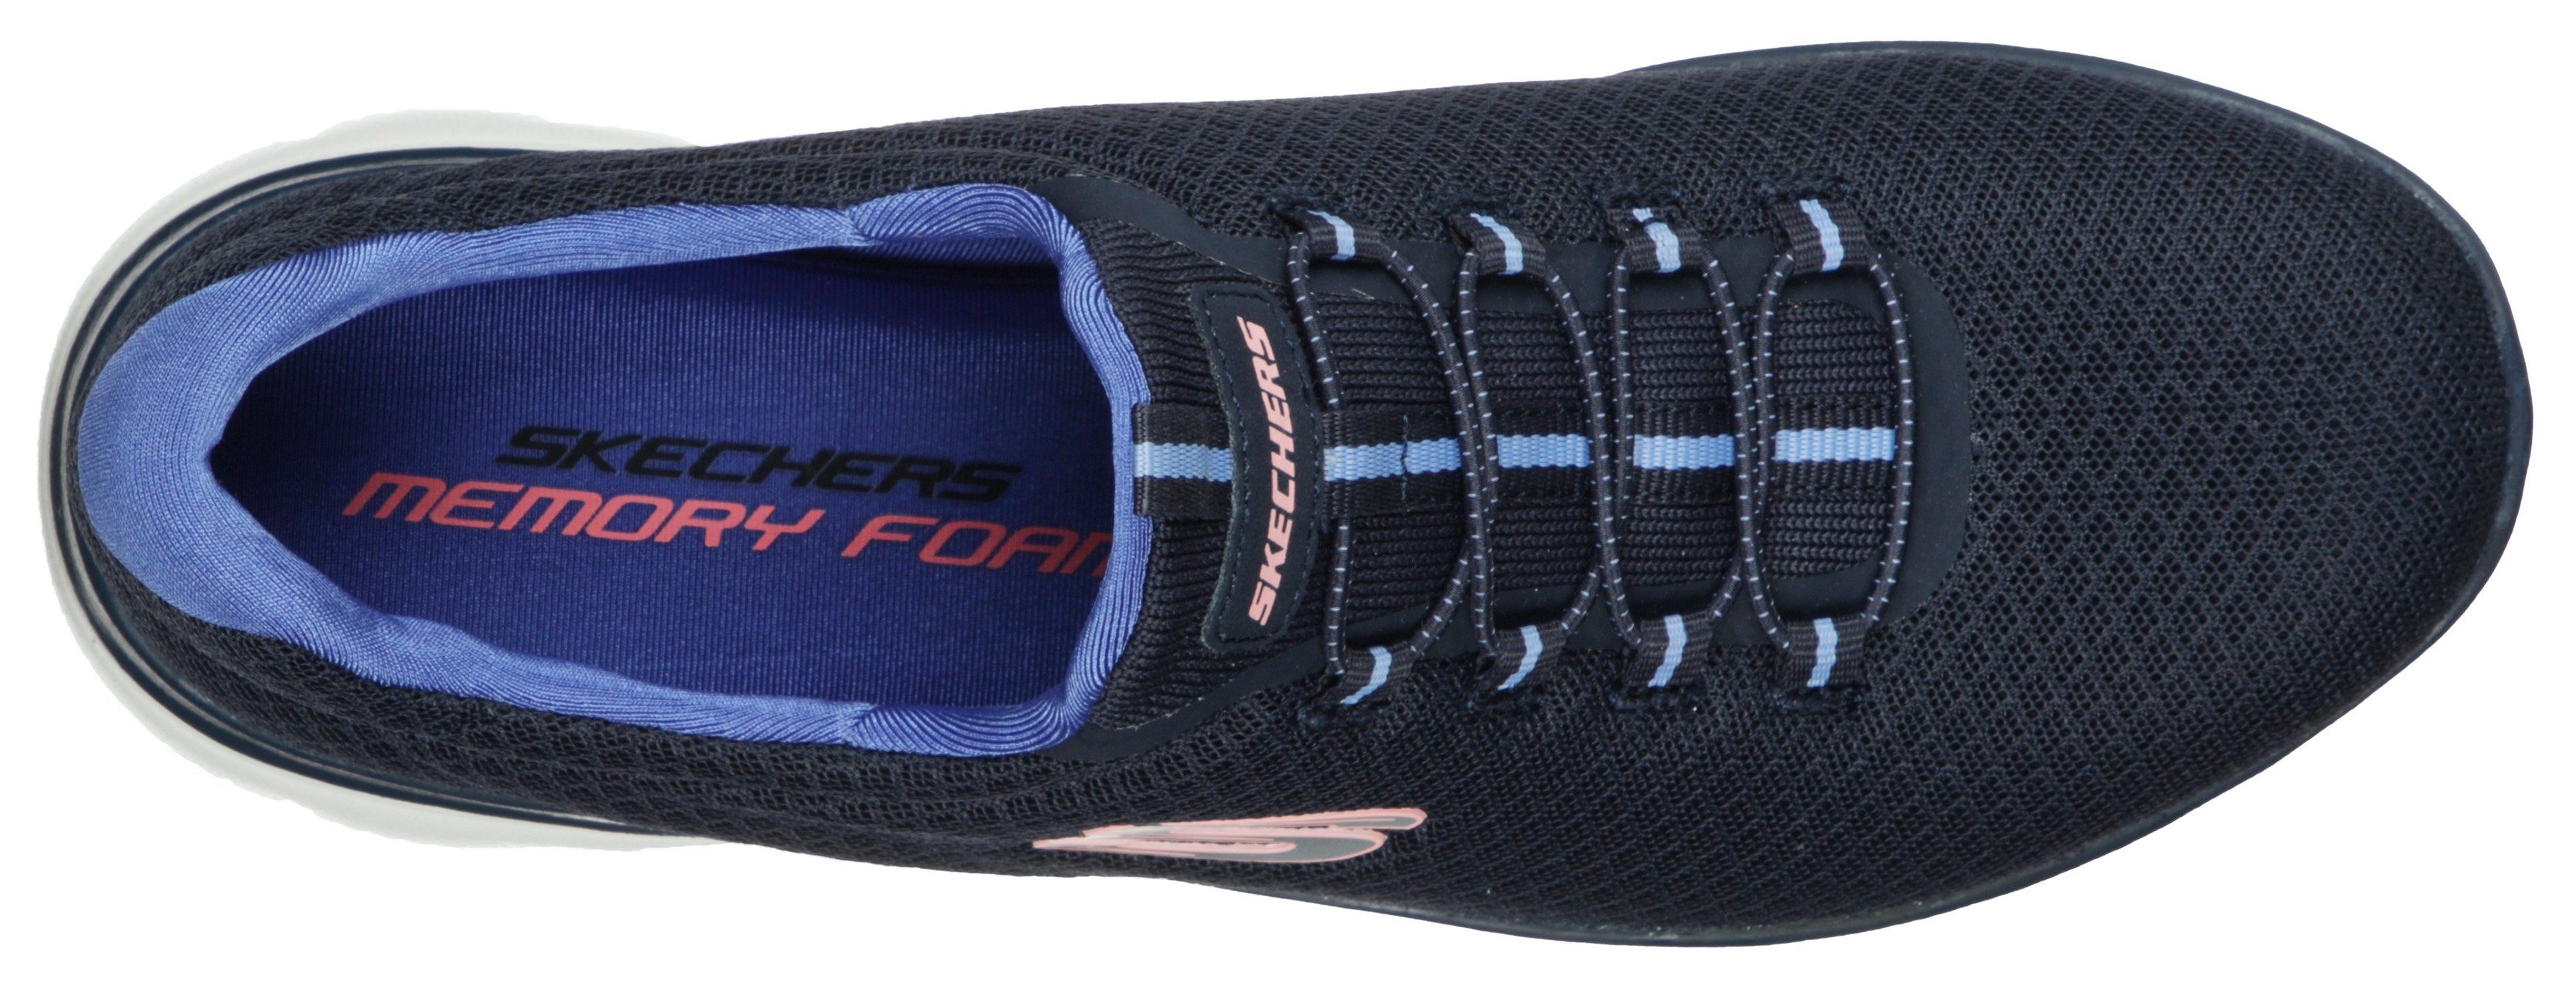 Skechers SUMMITS Slip-On Sneaker Kontrast-Details navy-blau mit dezenten